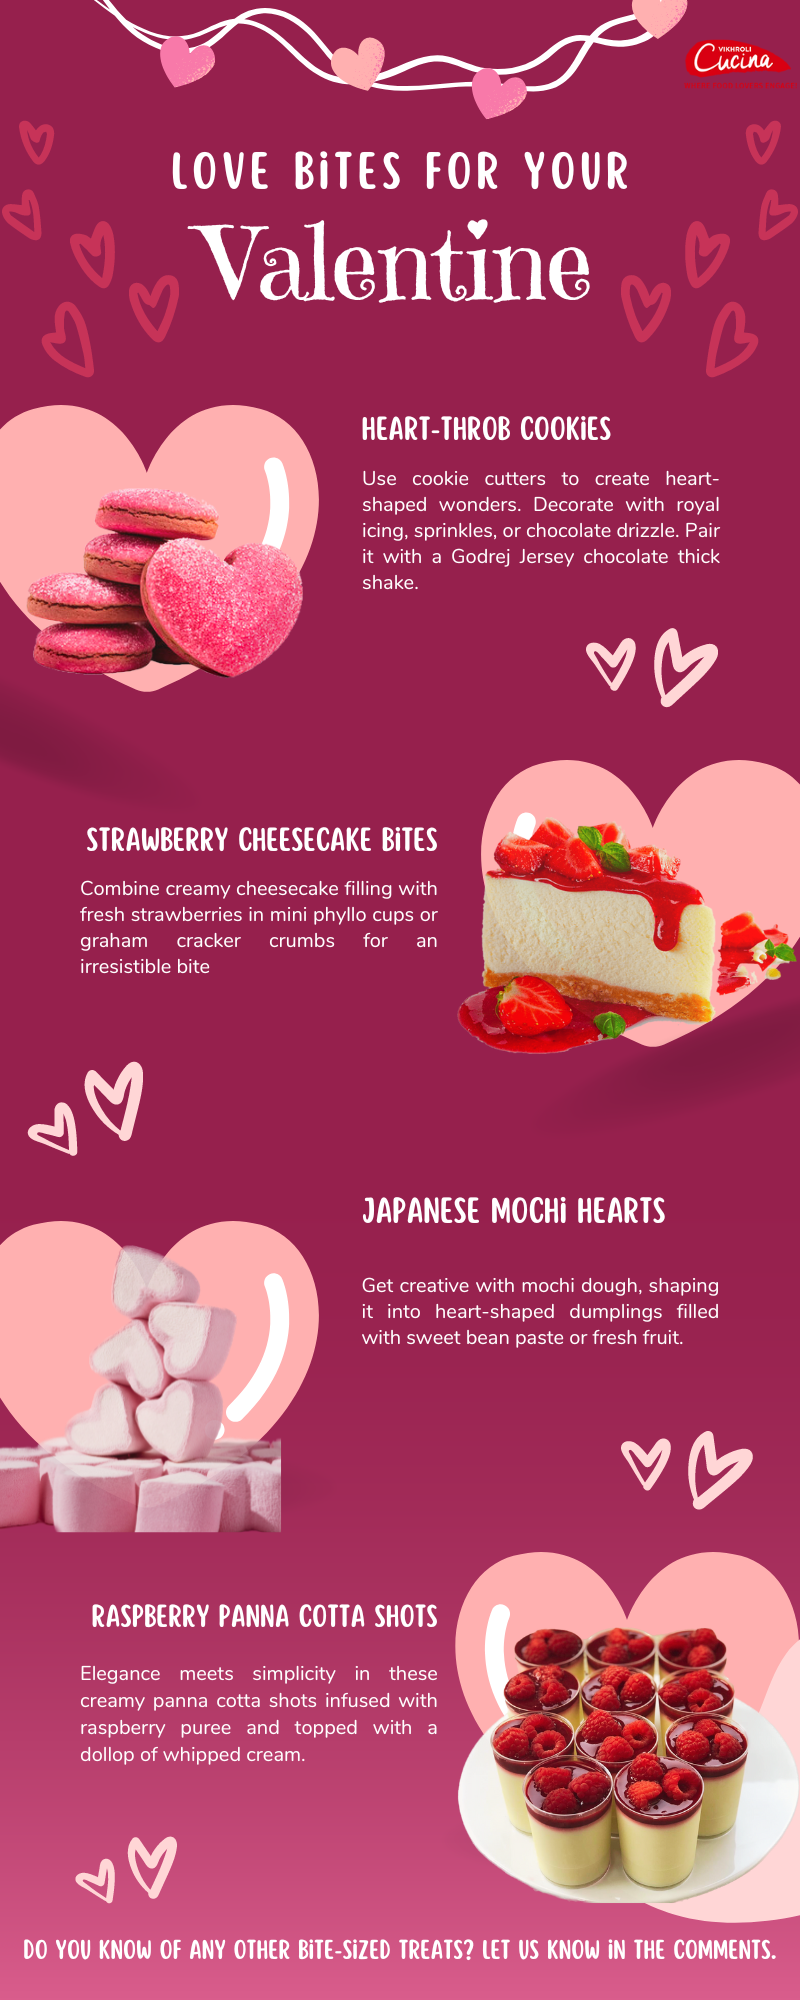 Love bites: Mini desserts for your valentine